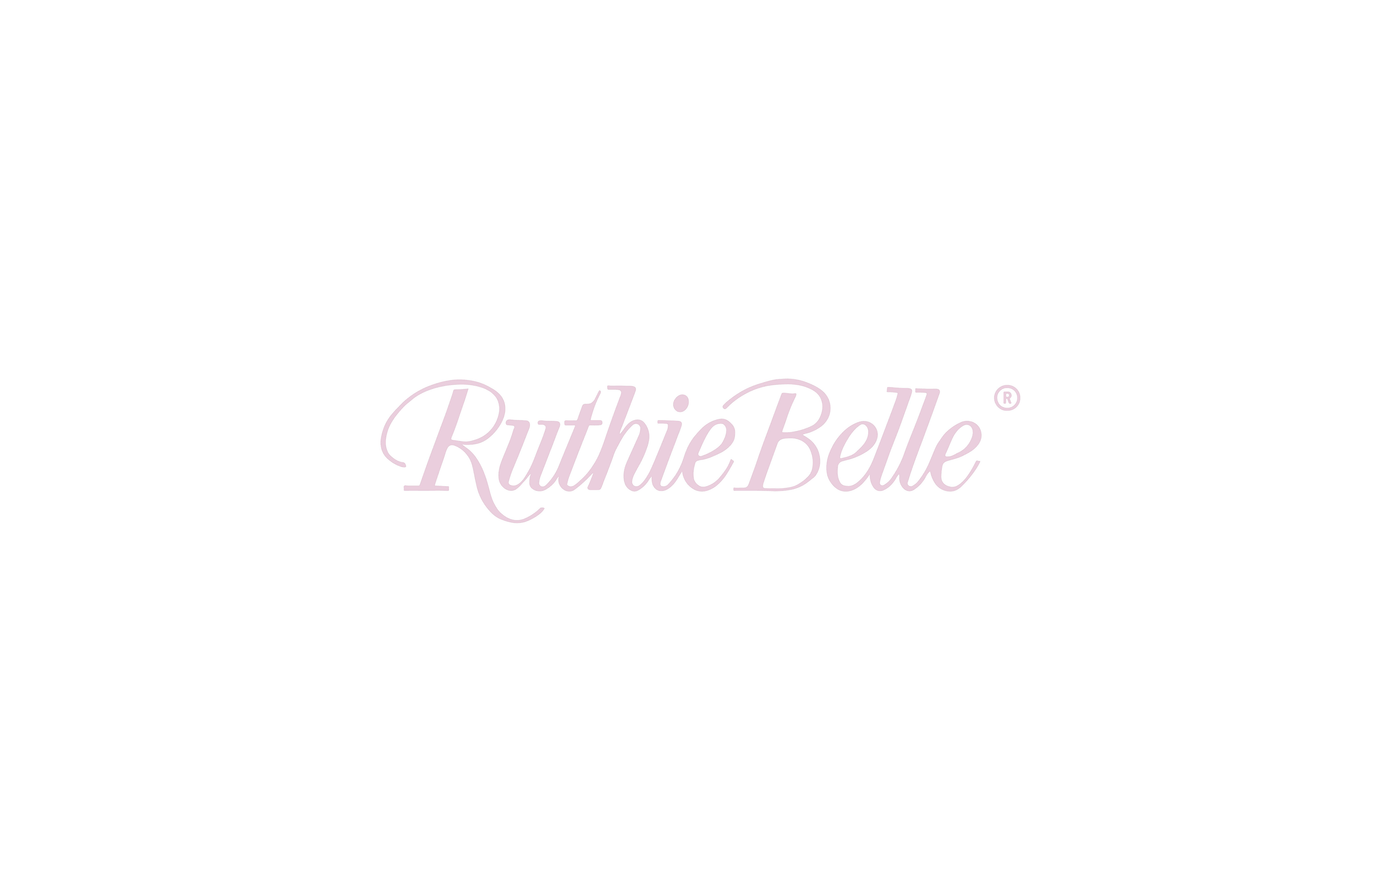 RUTHIE BELLE